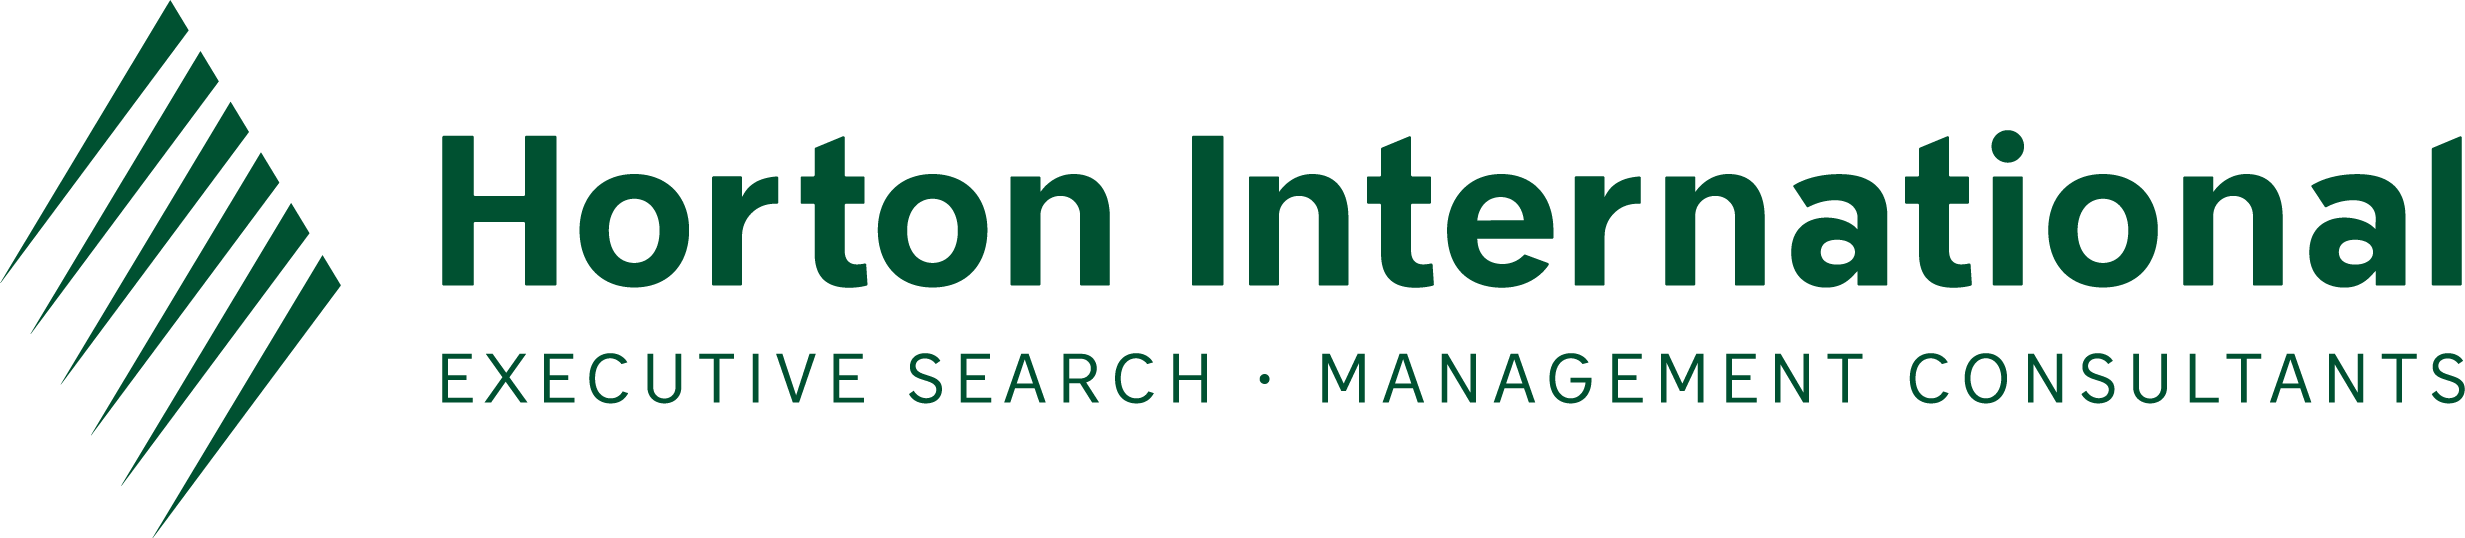 Green Horton International logo with text